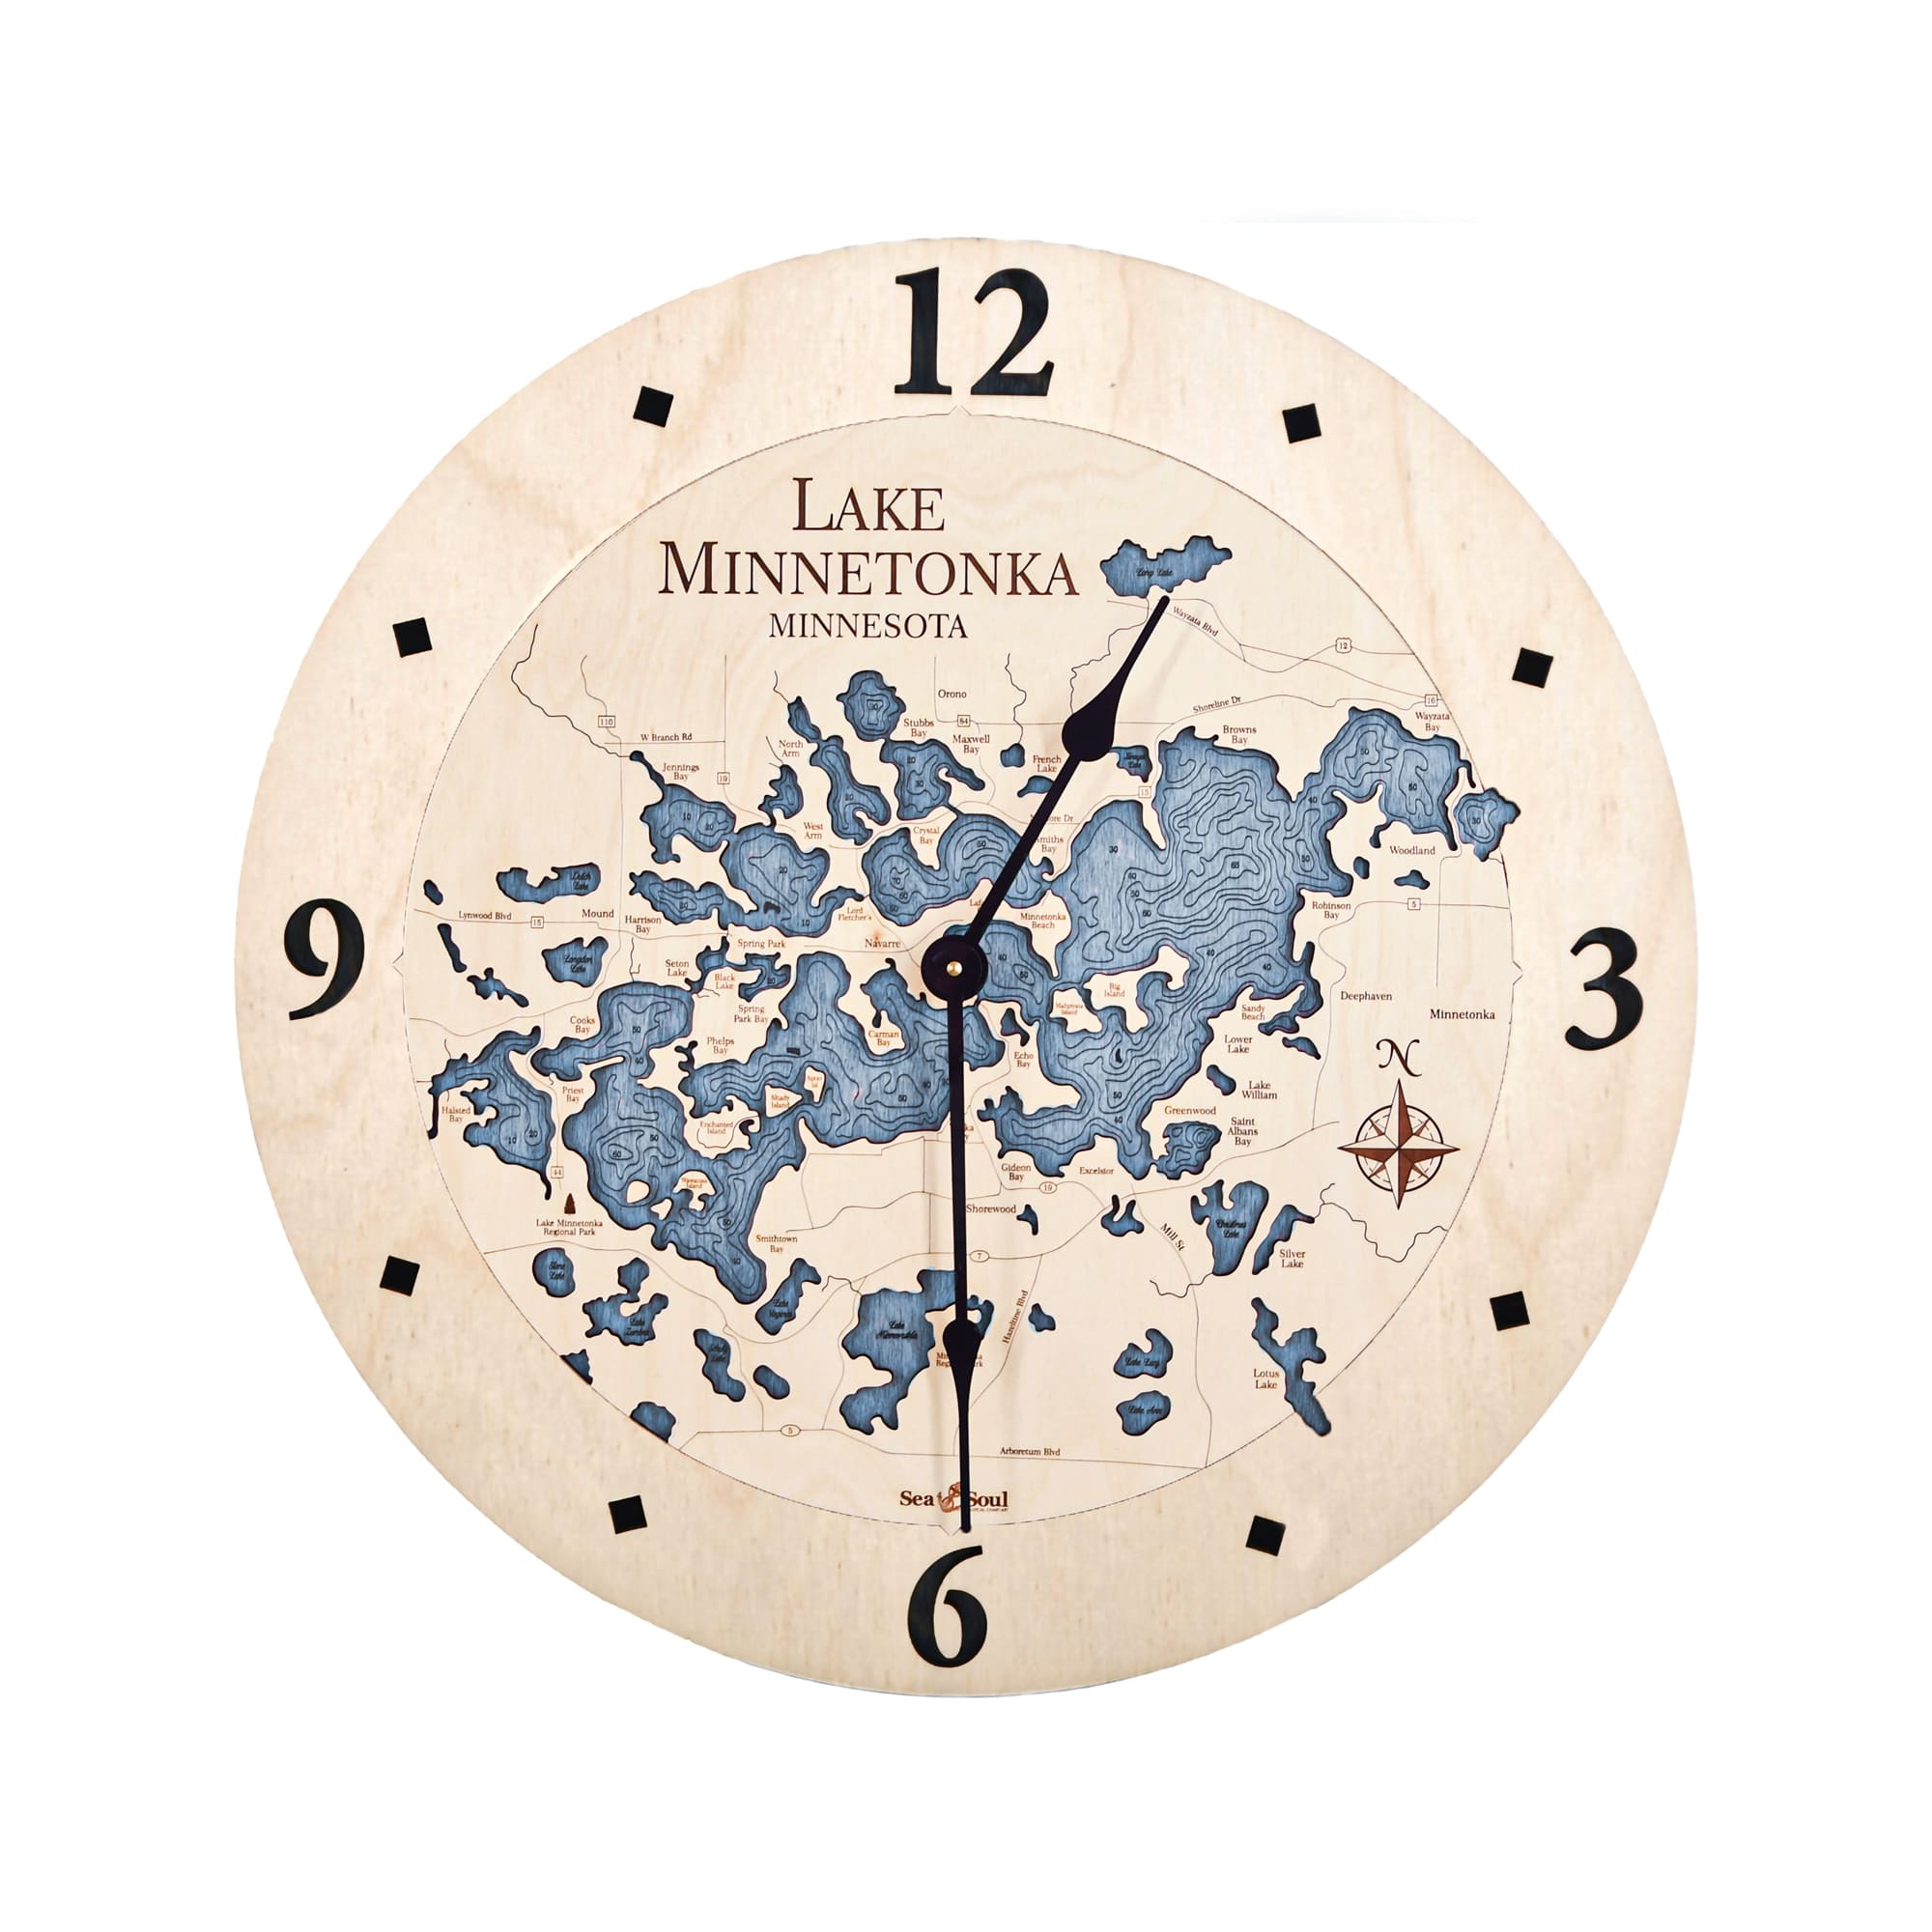 Lake Minnetonka Nautical Map Clock - Sea and Soul Charts